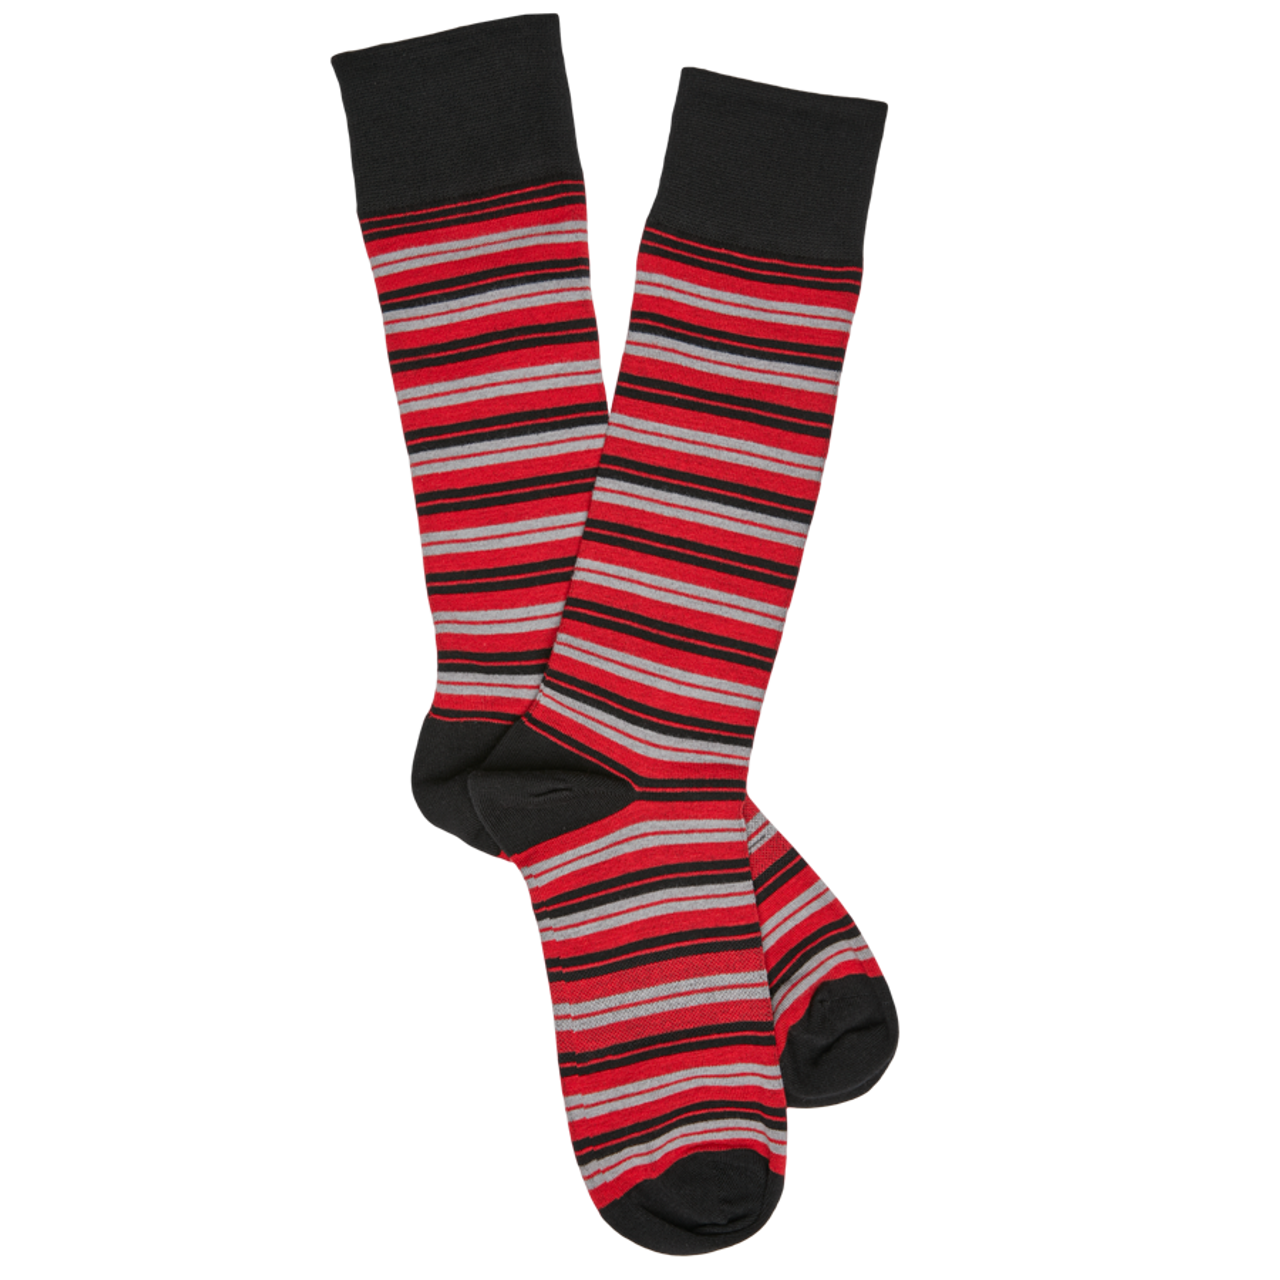 Black and Red Four Pack Socks, Premium College Socks